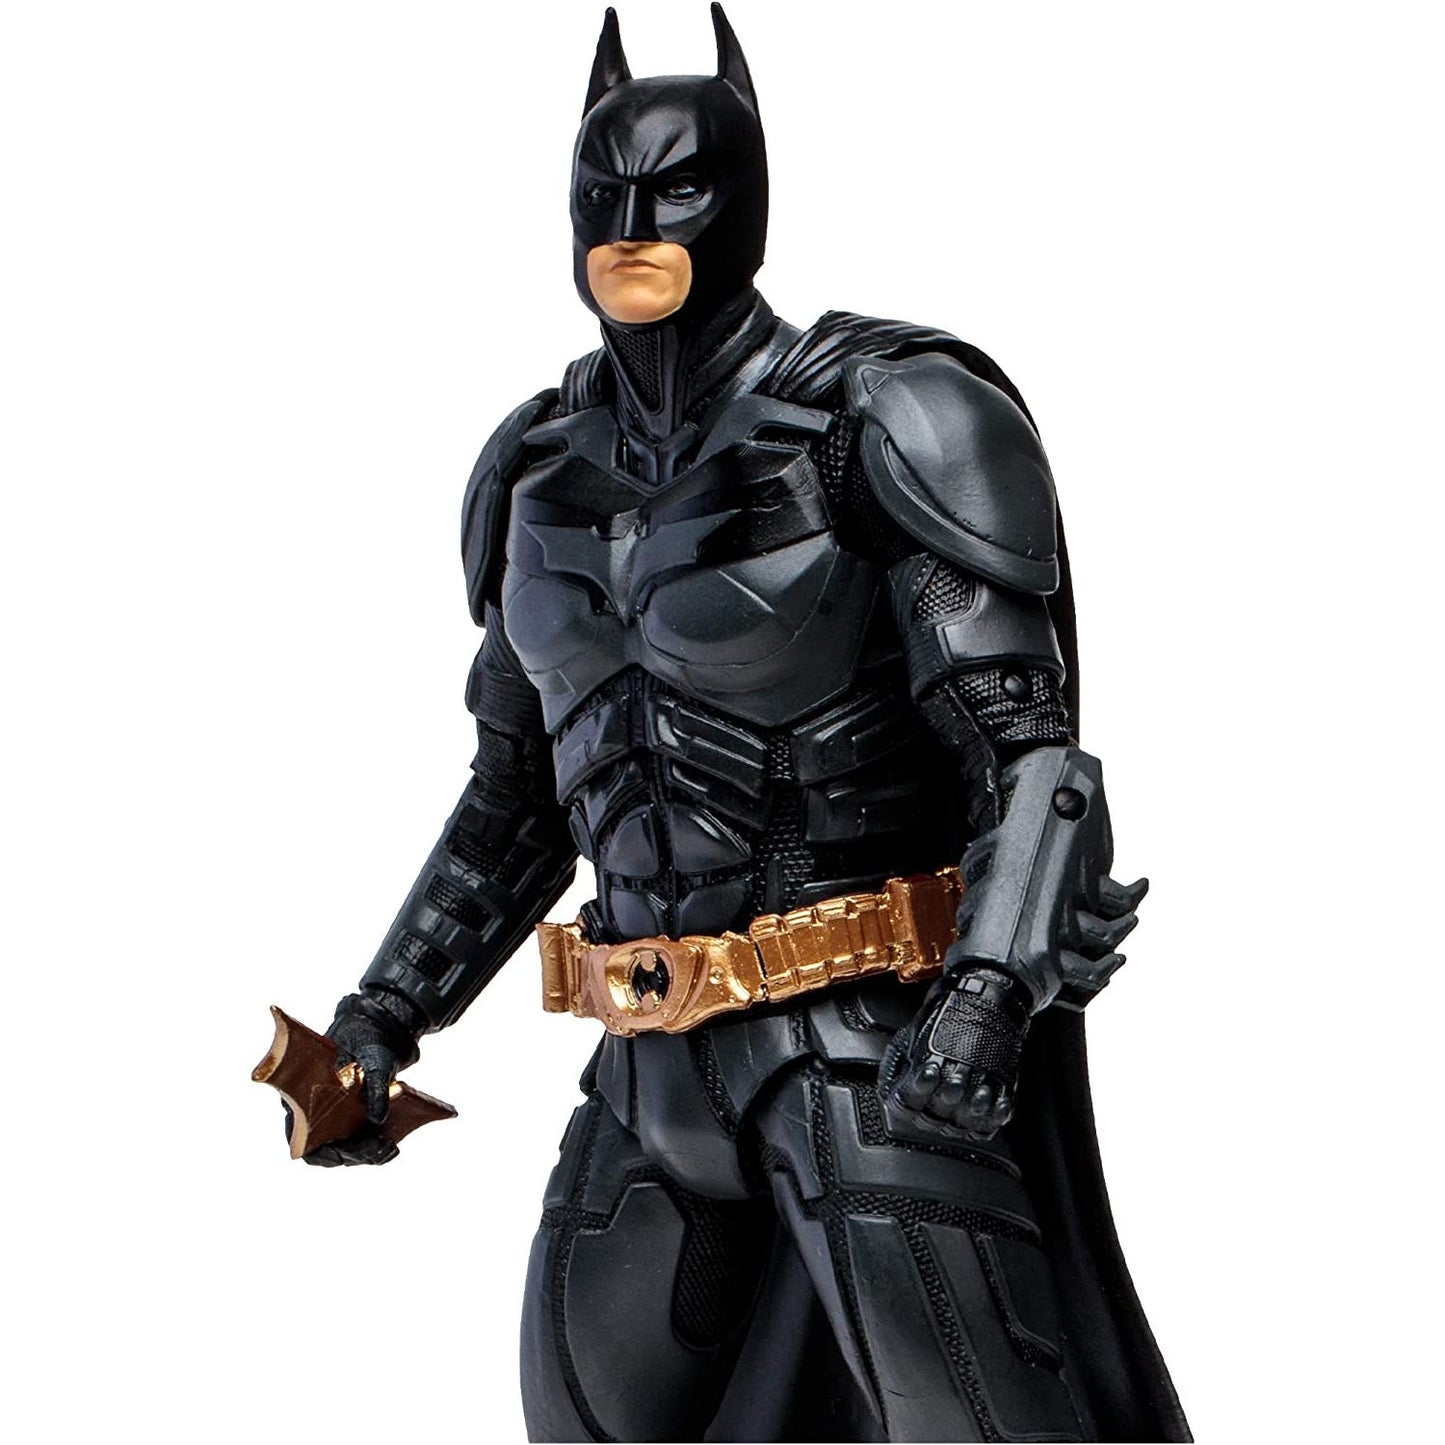 DC Multiverse Batman Action Figure (The Dark Knight Trilogy) 7-Inch Build-A-Figure Toy